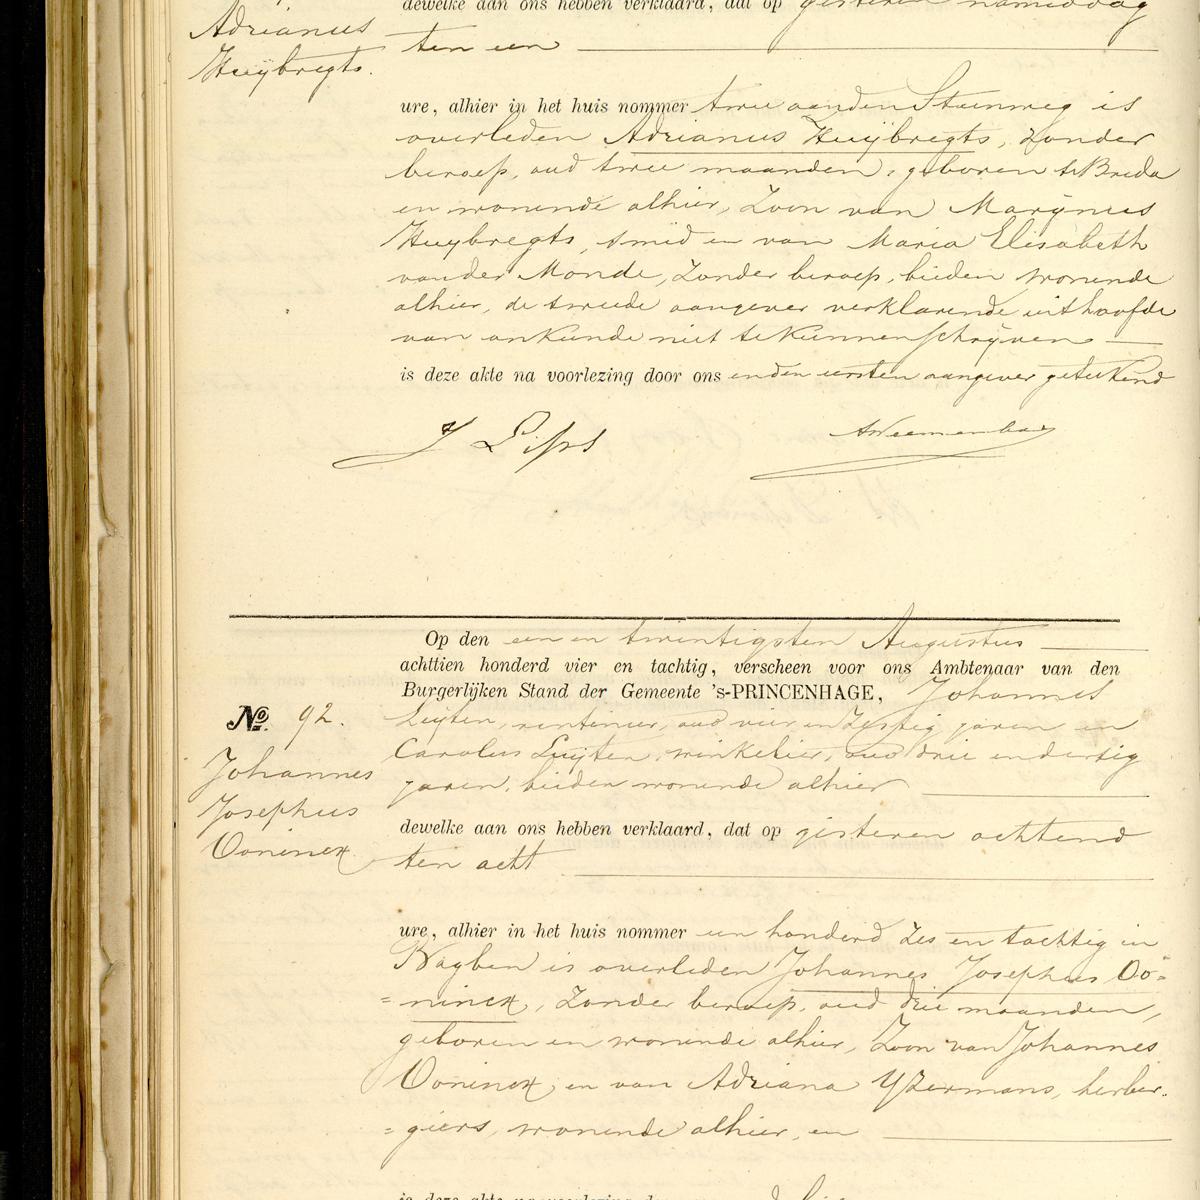 Civil registry of deaths, Princenhage, 1884, records 91-92